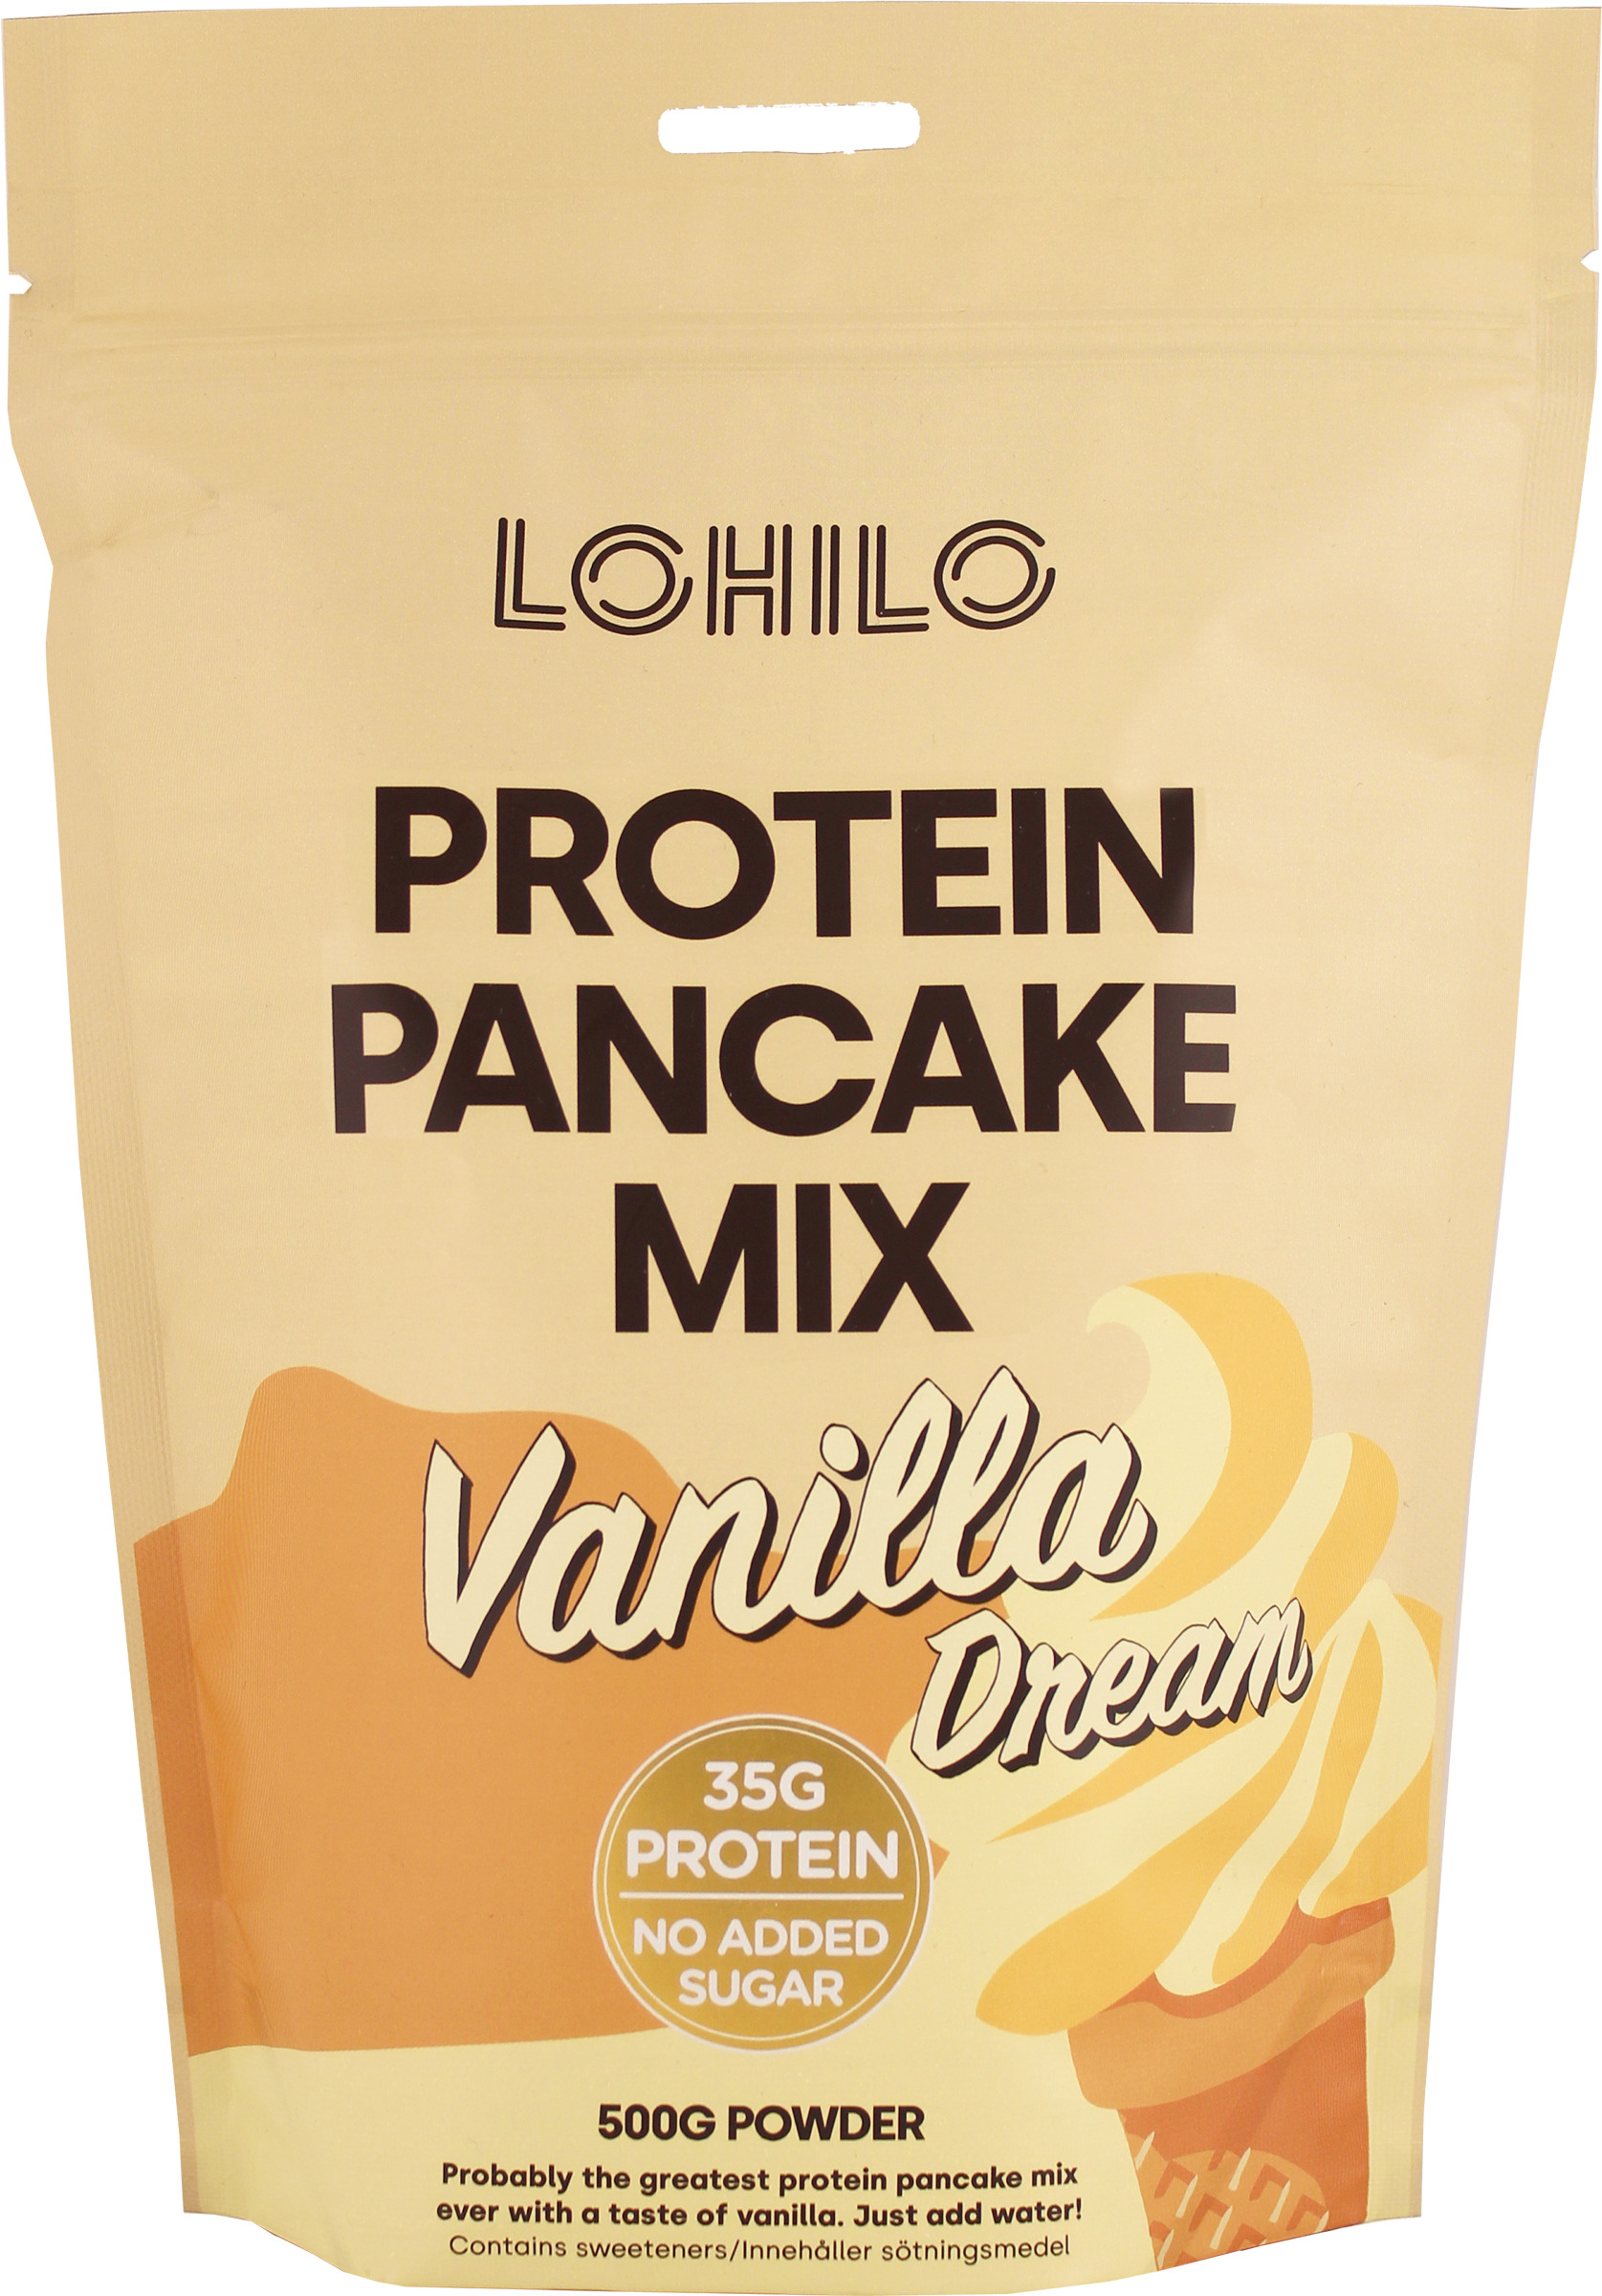 Lohilo Protein Pancake Mix Vanilla Dream 500 g